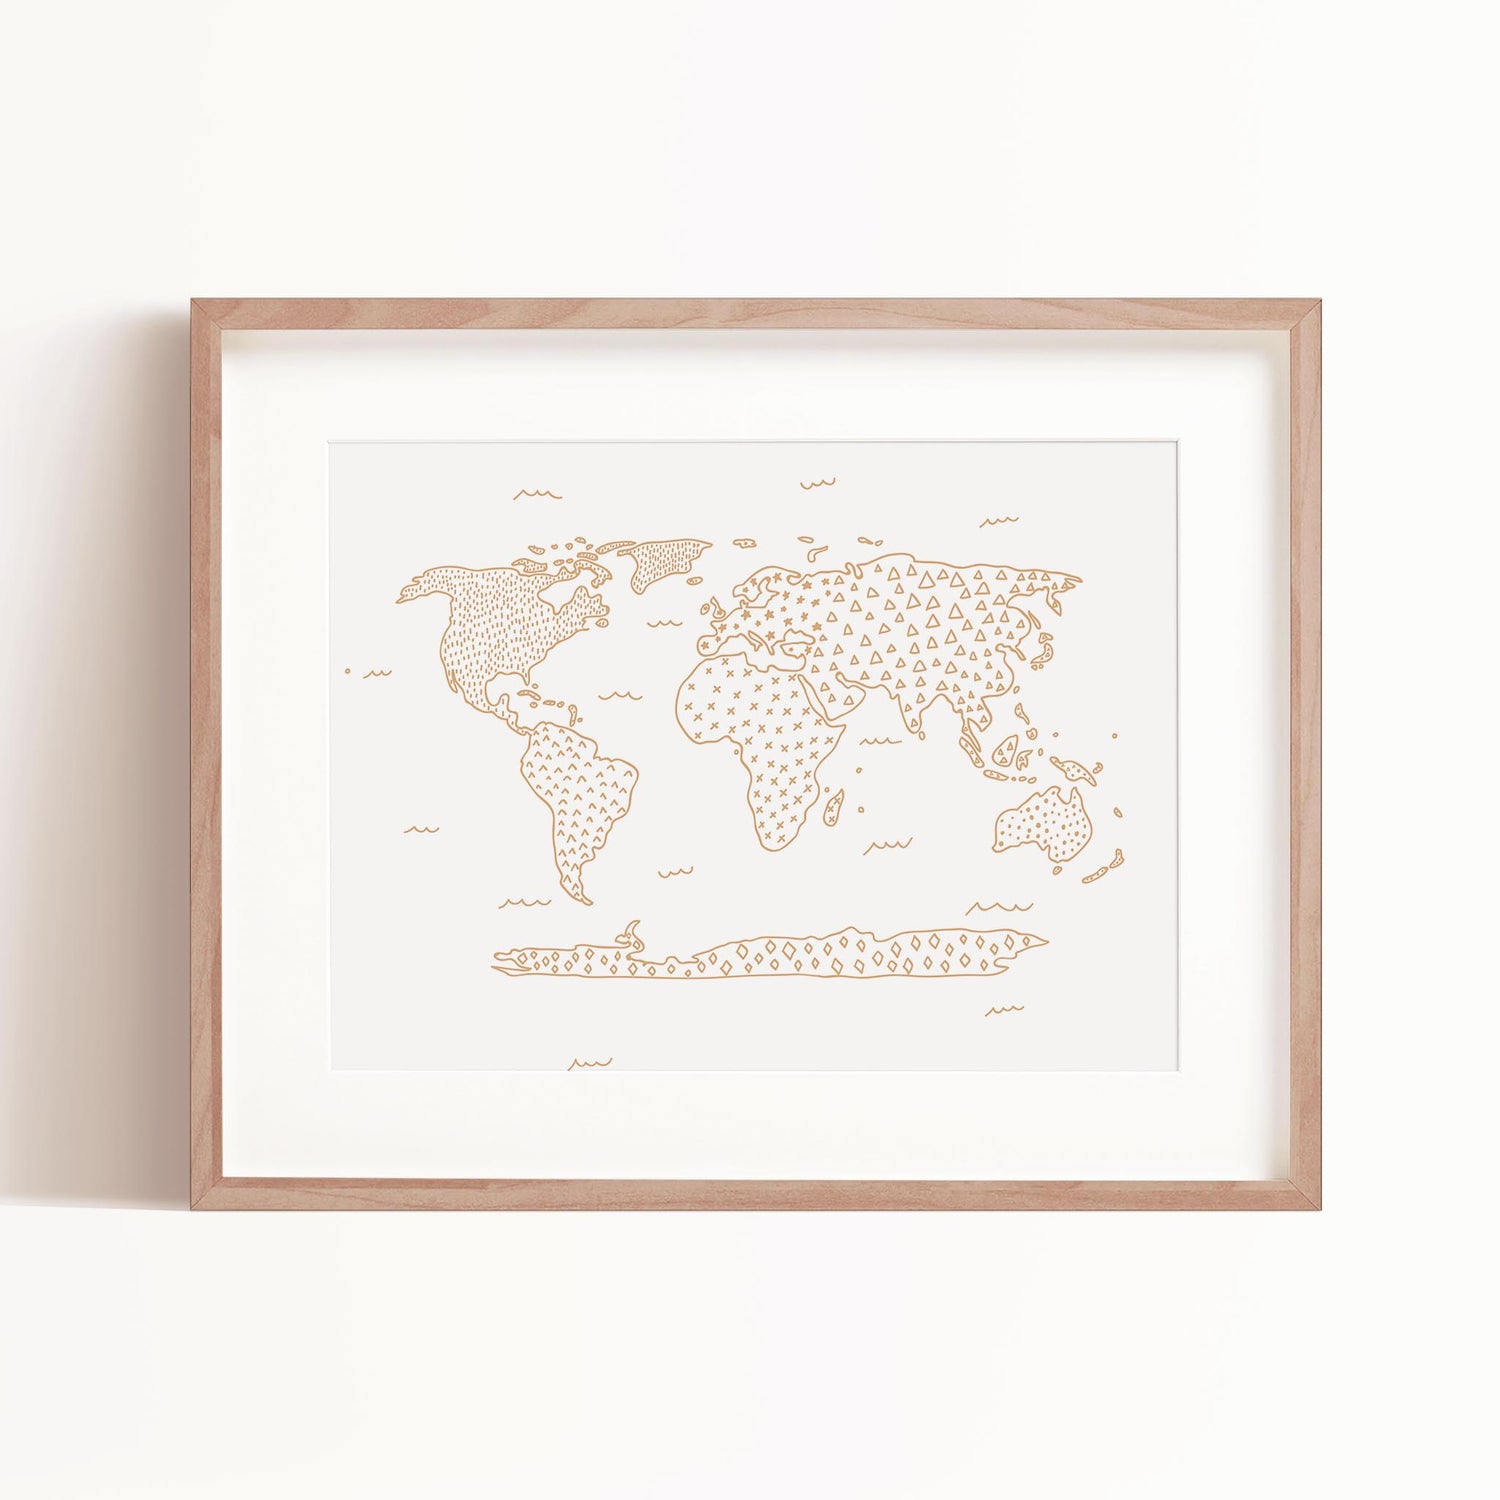 Modern Map art print in Tan in a frame by artist Brenda Bird